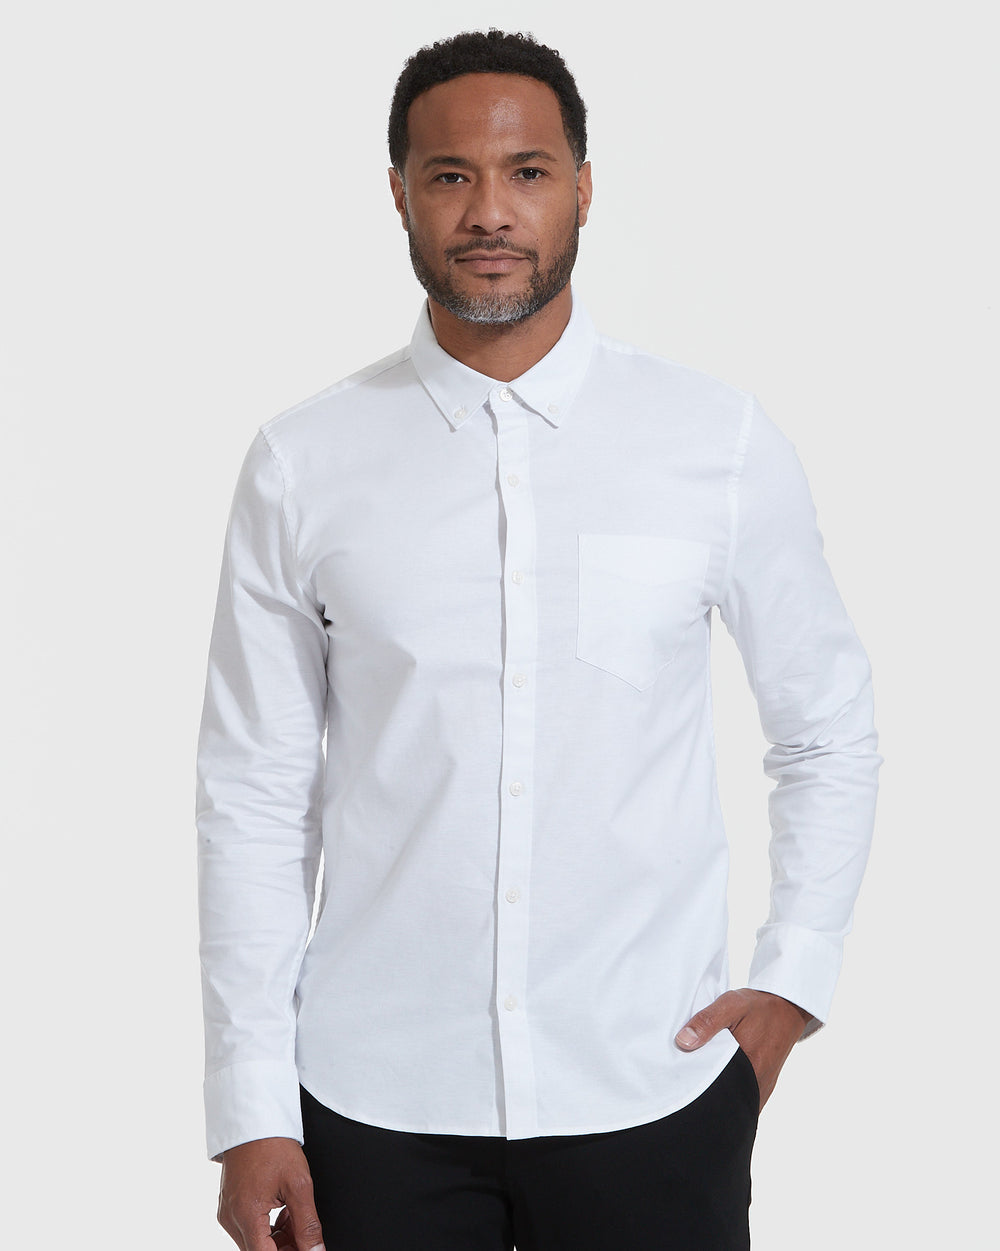 White Stretch Oxford Long Sleeve Shirt